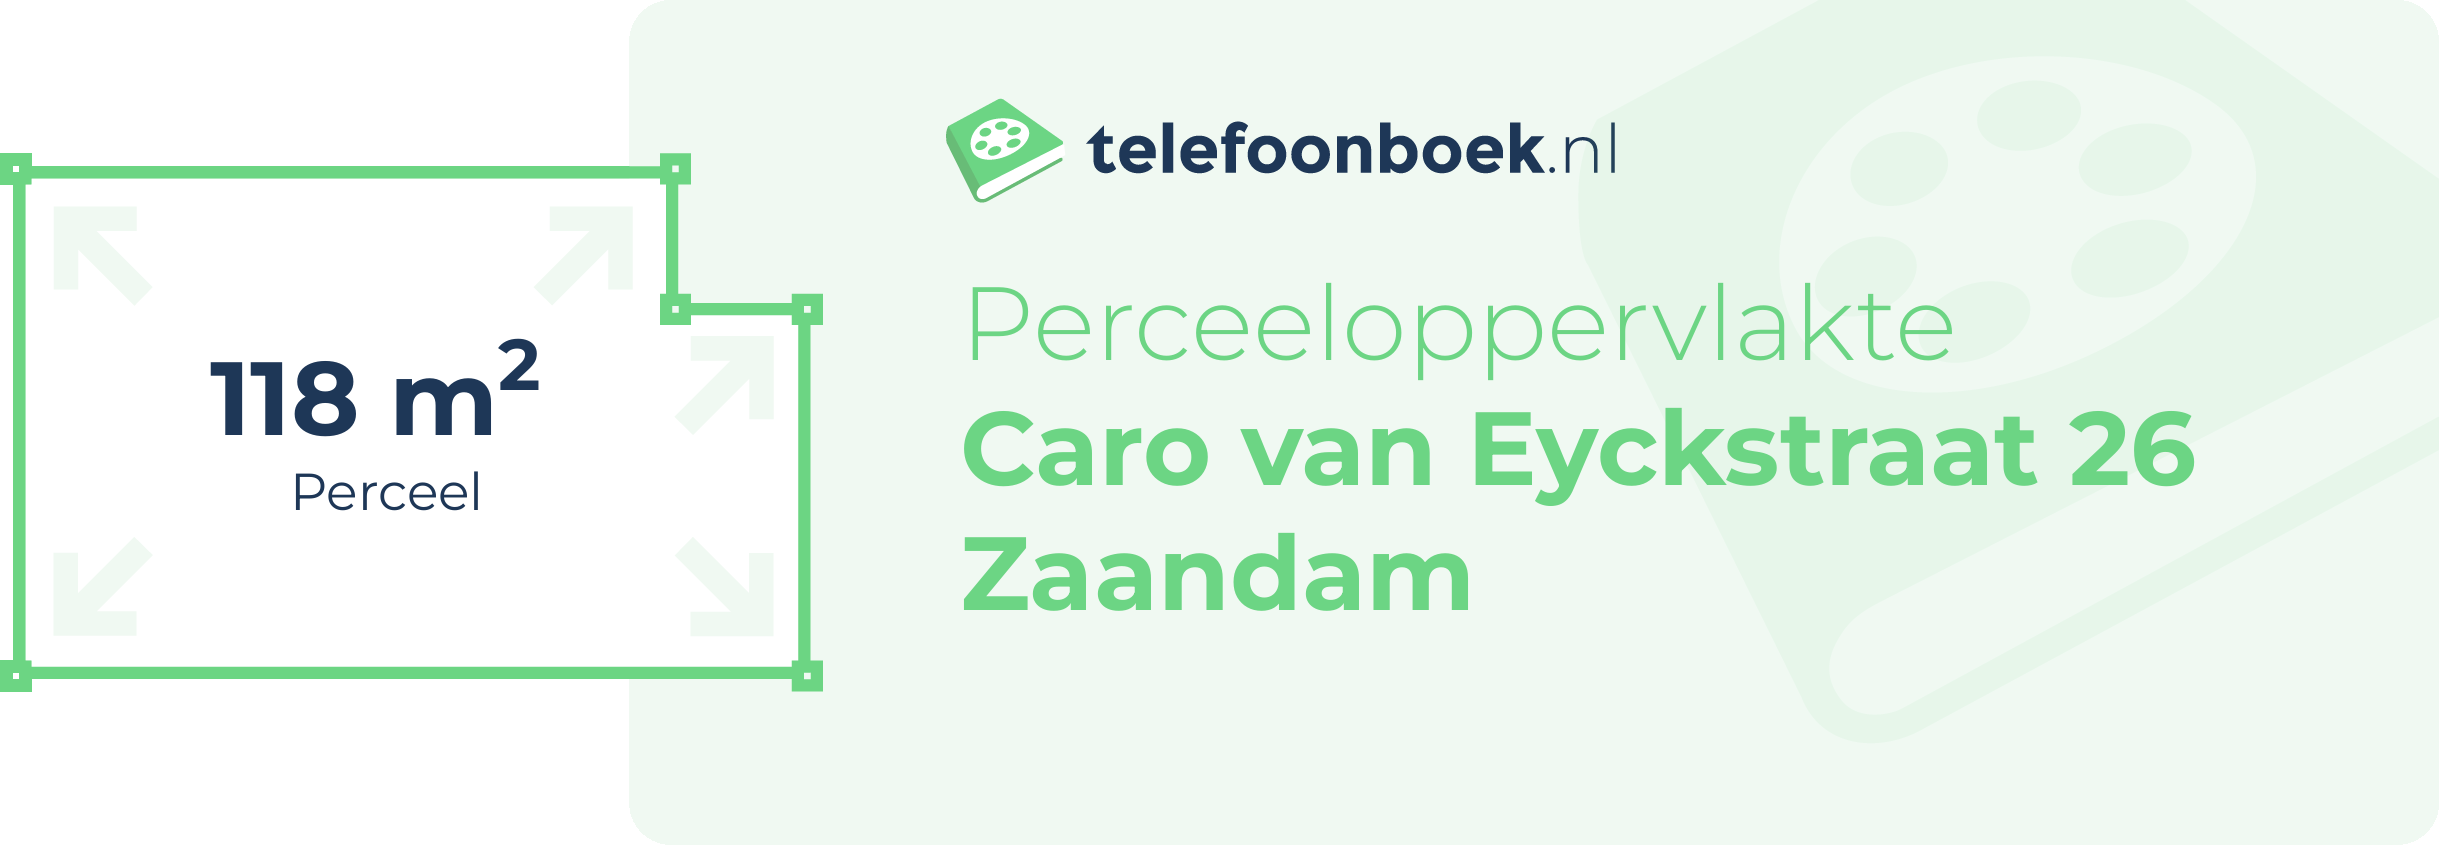 Perceeloppervlakte Caro Van Eyckstraat 26 Zaandam